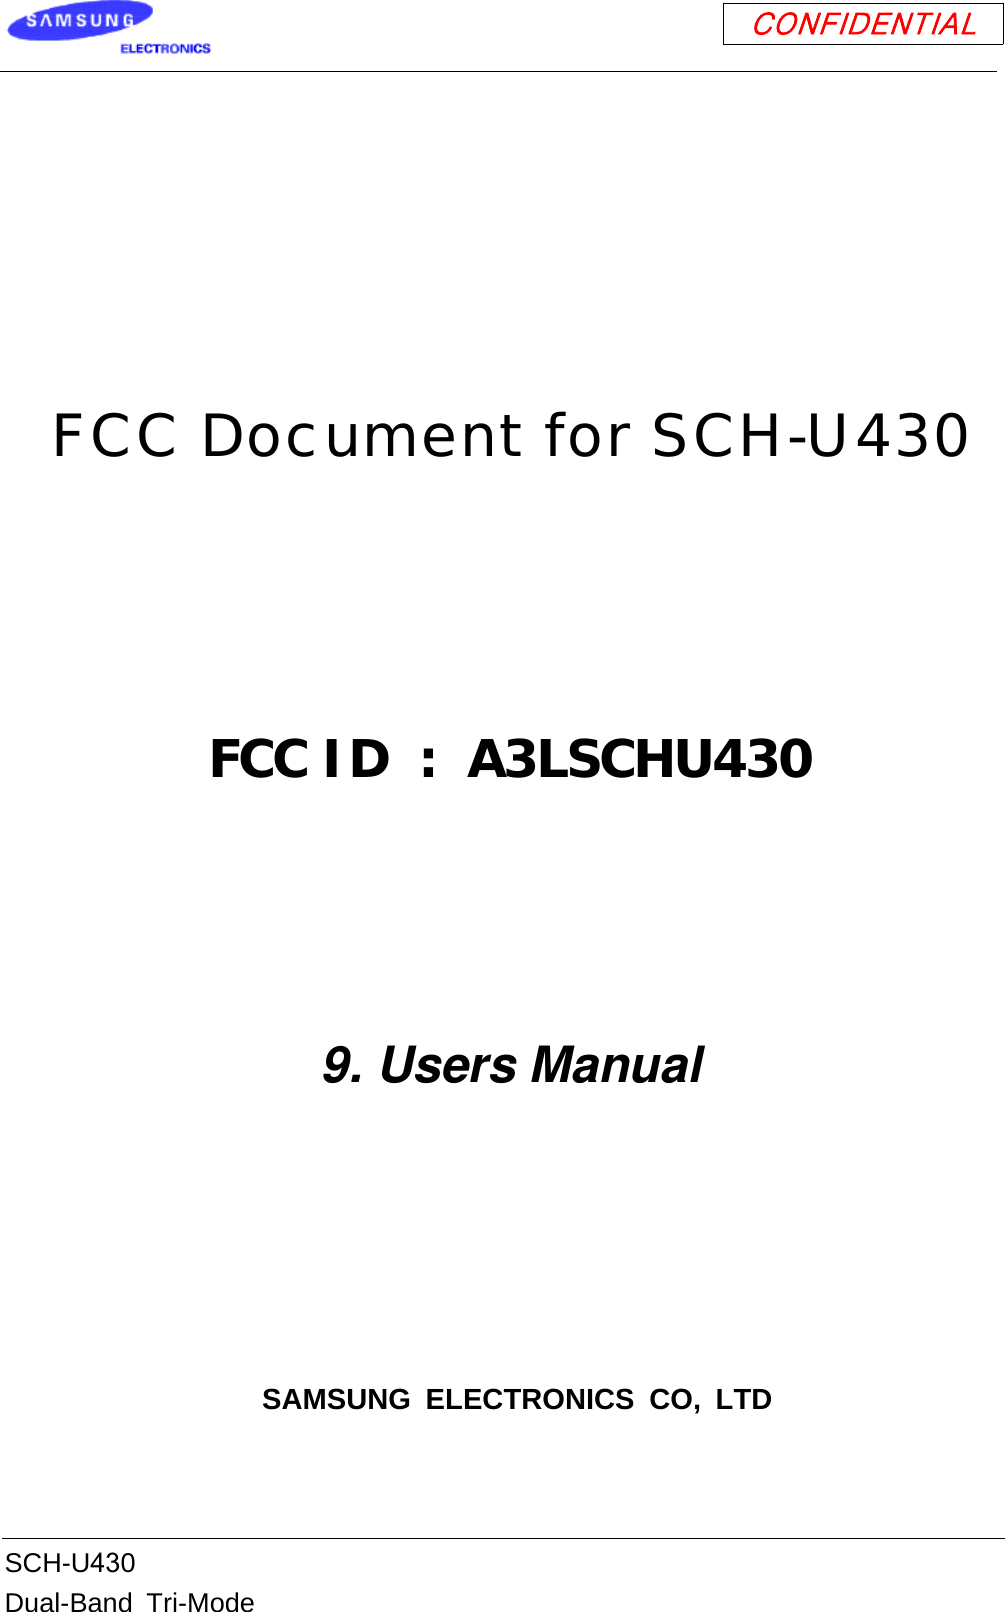 CONFIDENTIALSCH-U430Dual-Band Tri-ModeFCC Document for SCH-U430 FCC ID  :  A3LSCHU430SAMSUNG ELECTRONICS CO, LTD9. Users Manual